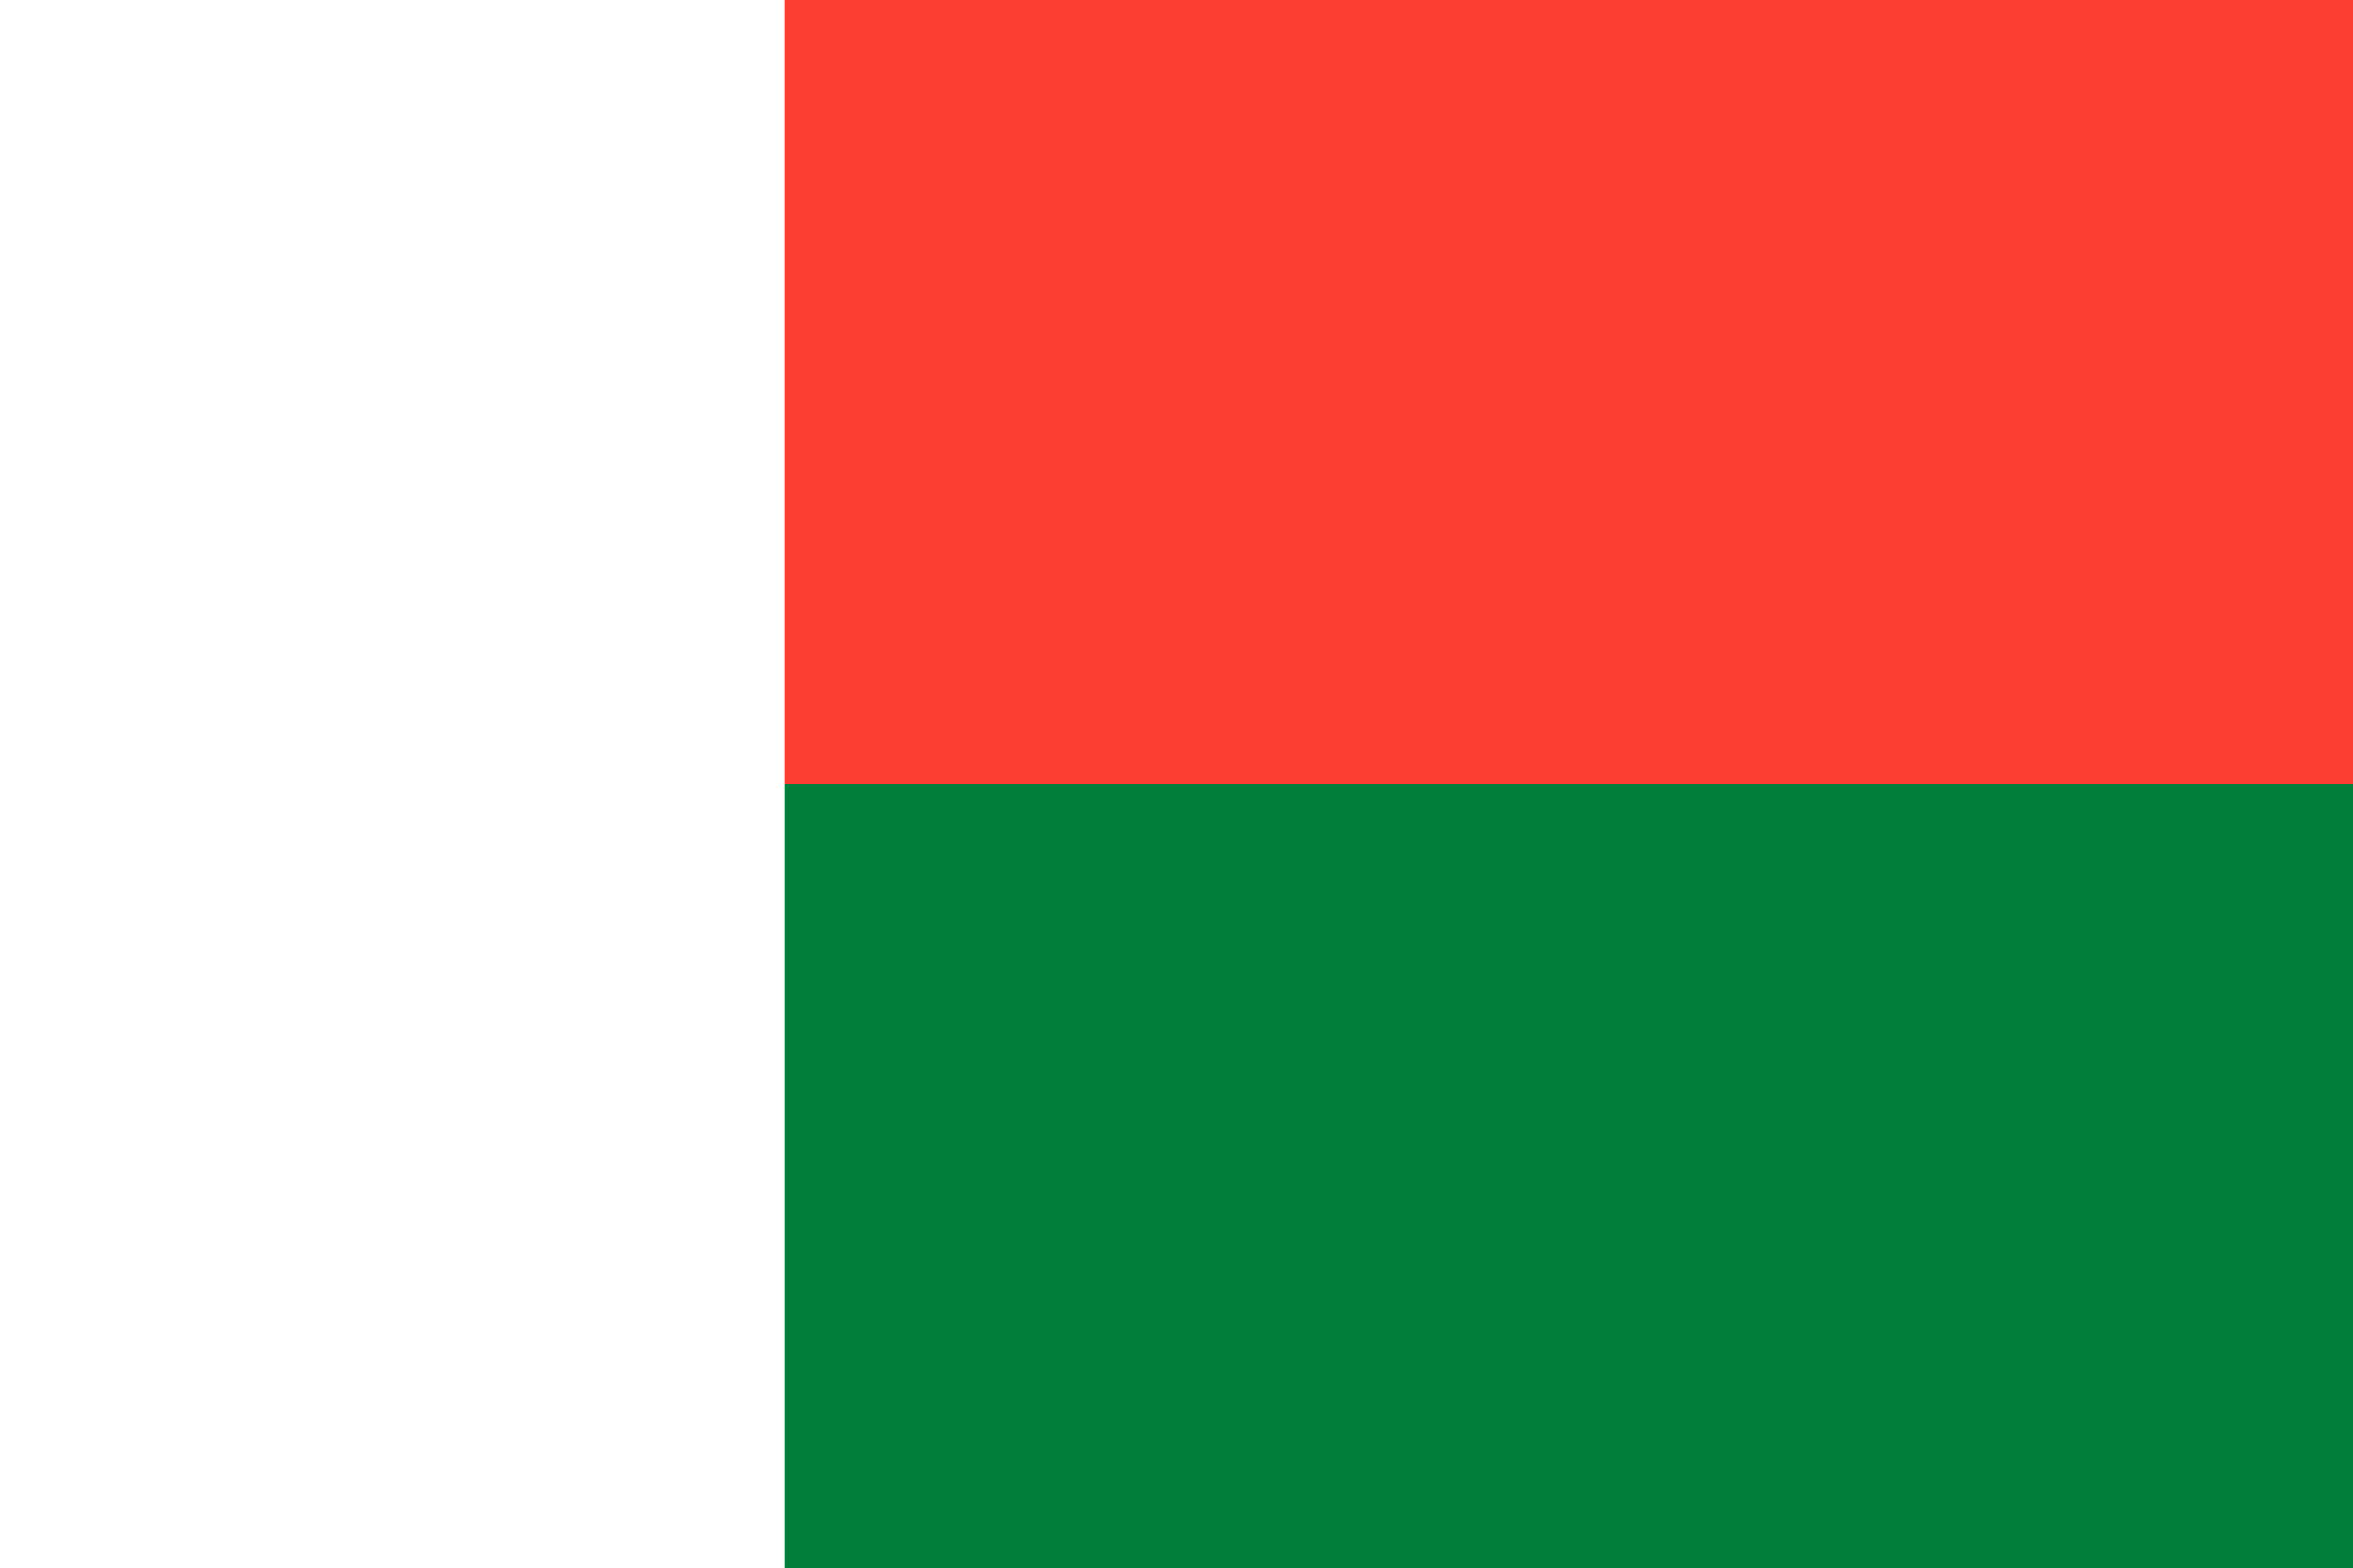 Free Madagascar Flag Documents: PDF, DOC, DOCX, HTML & More!